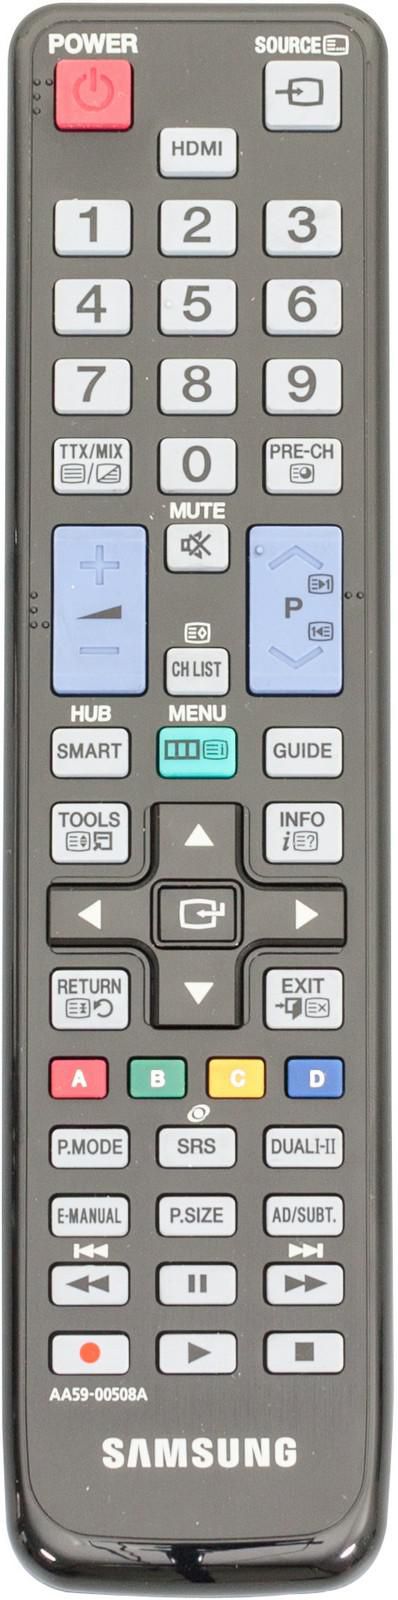 Samsung Remote Control - W124944909